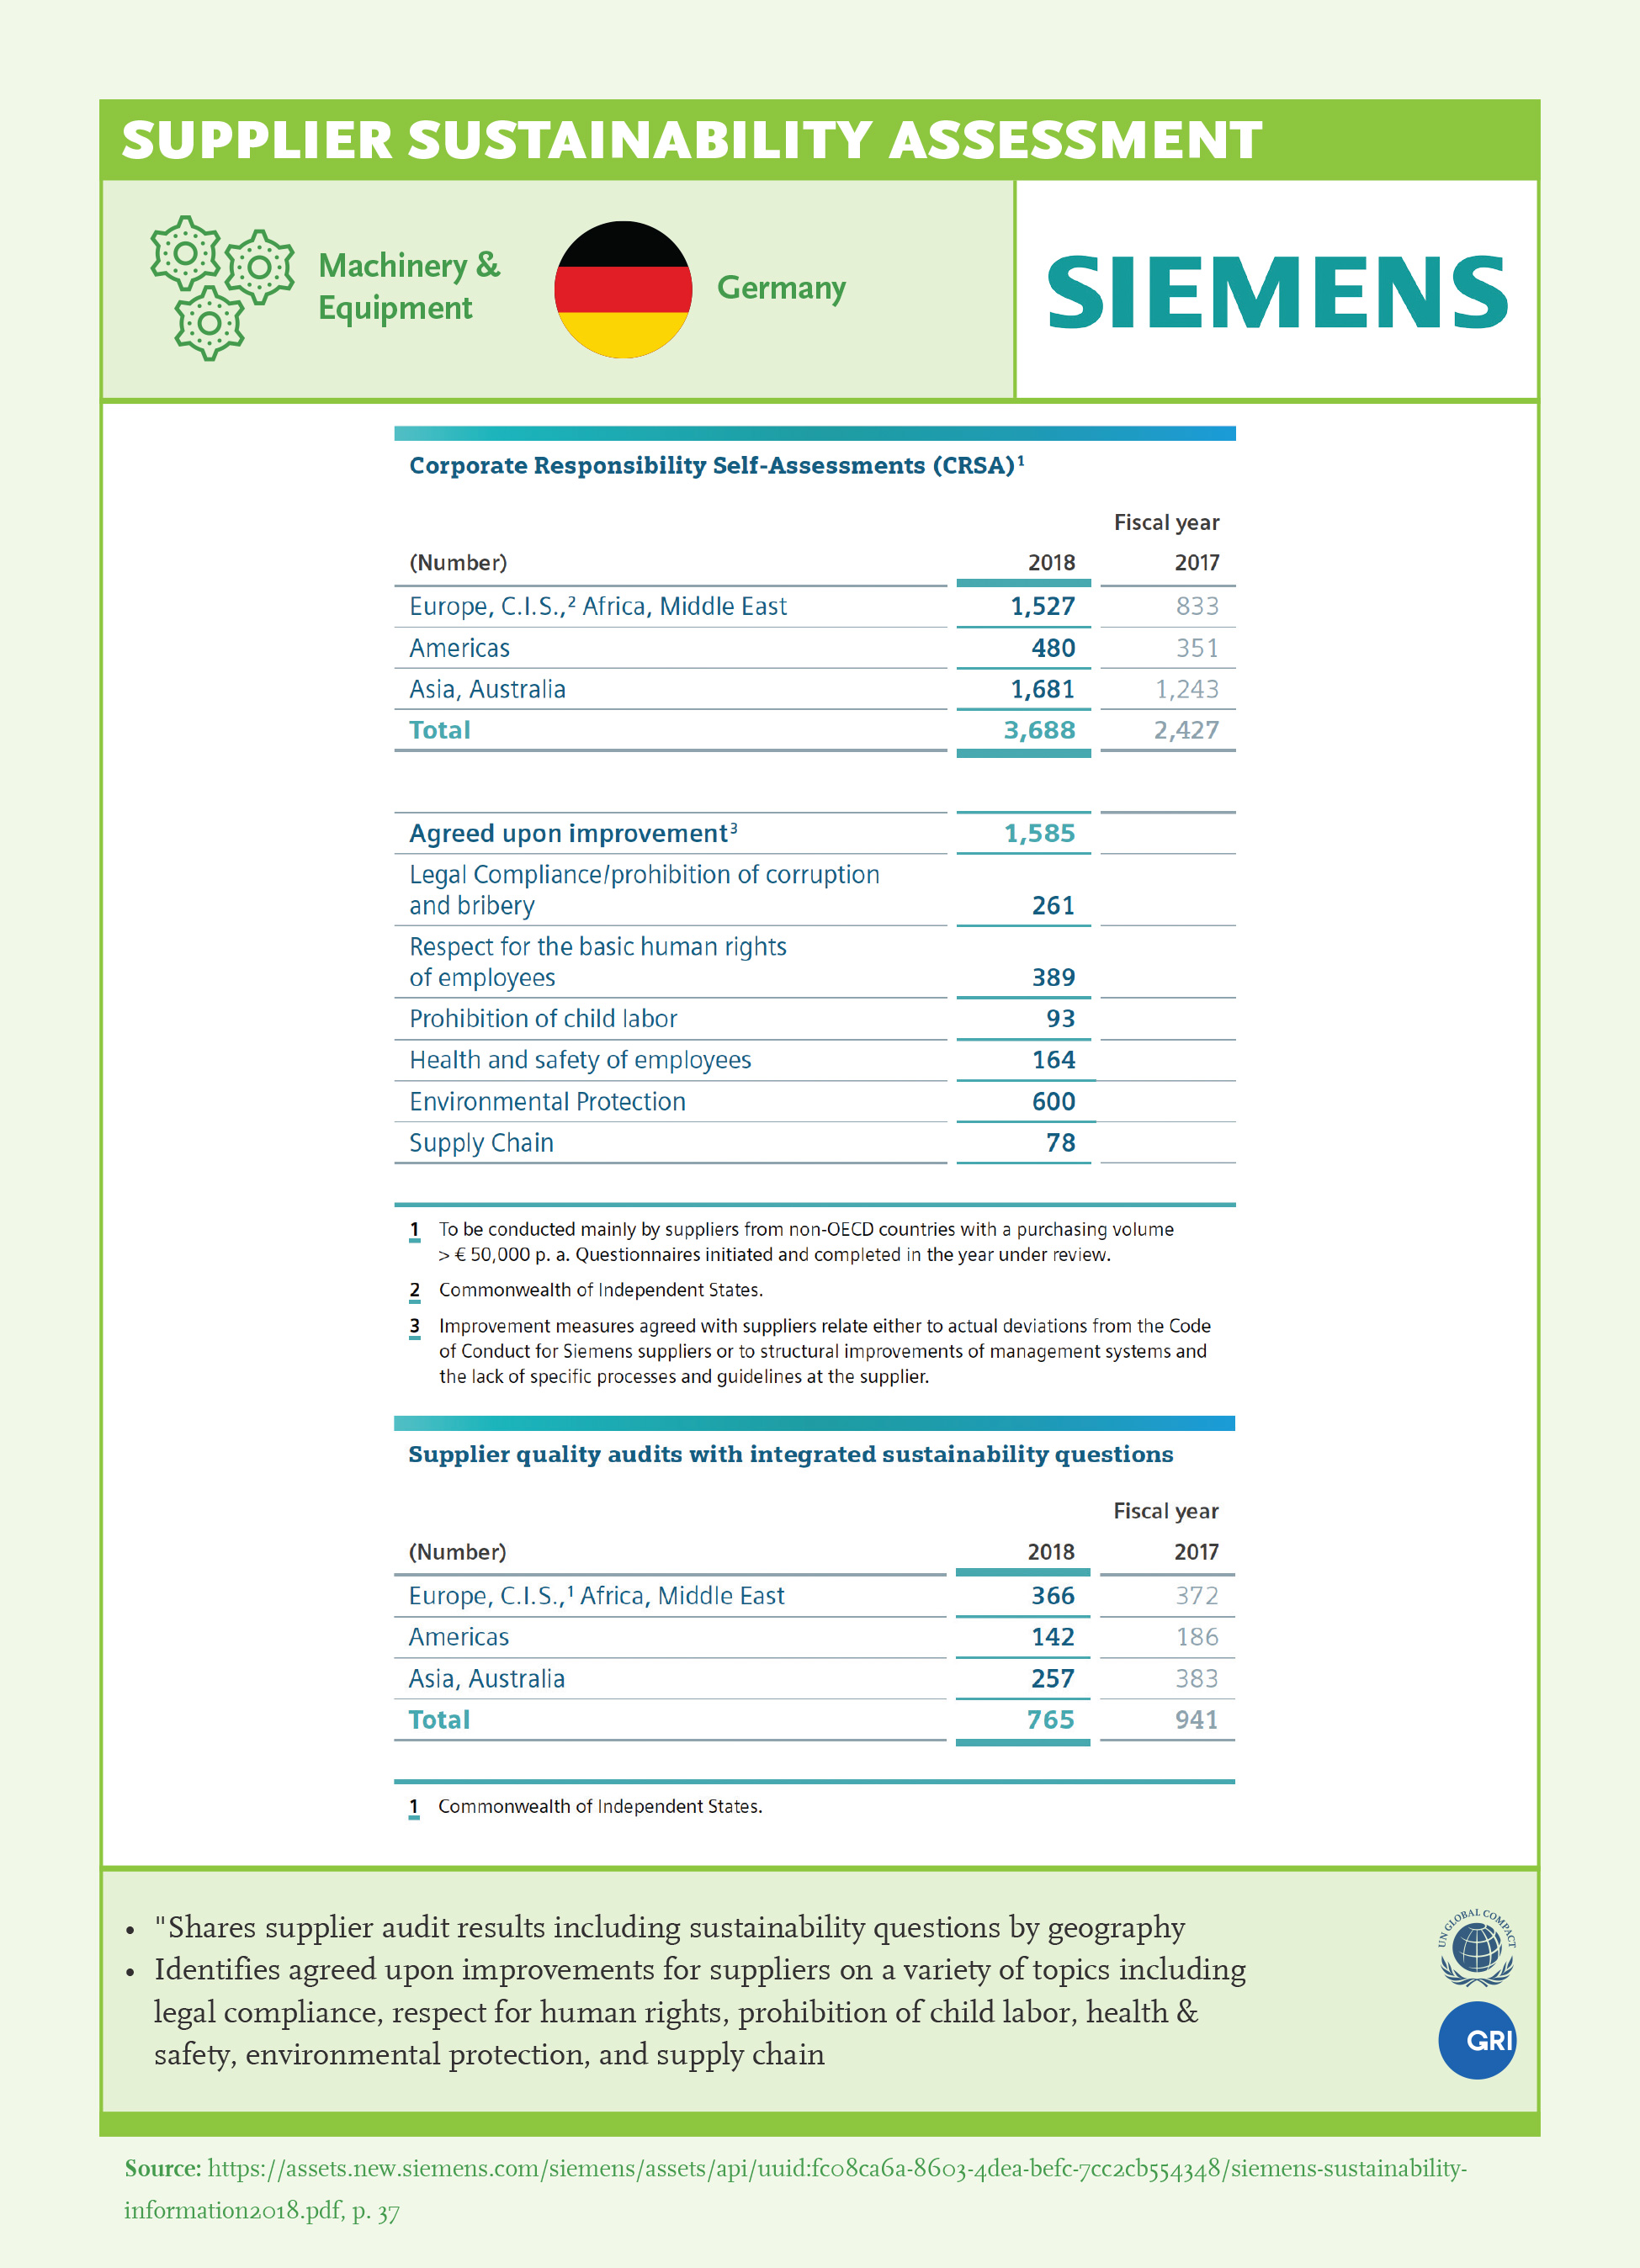 Supplier Governance Assessment: Siemens